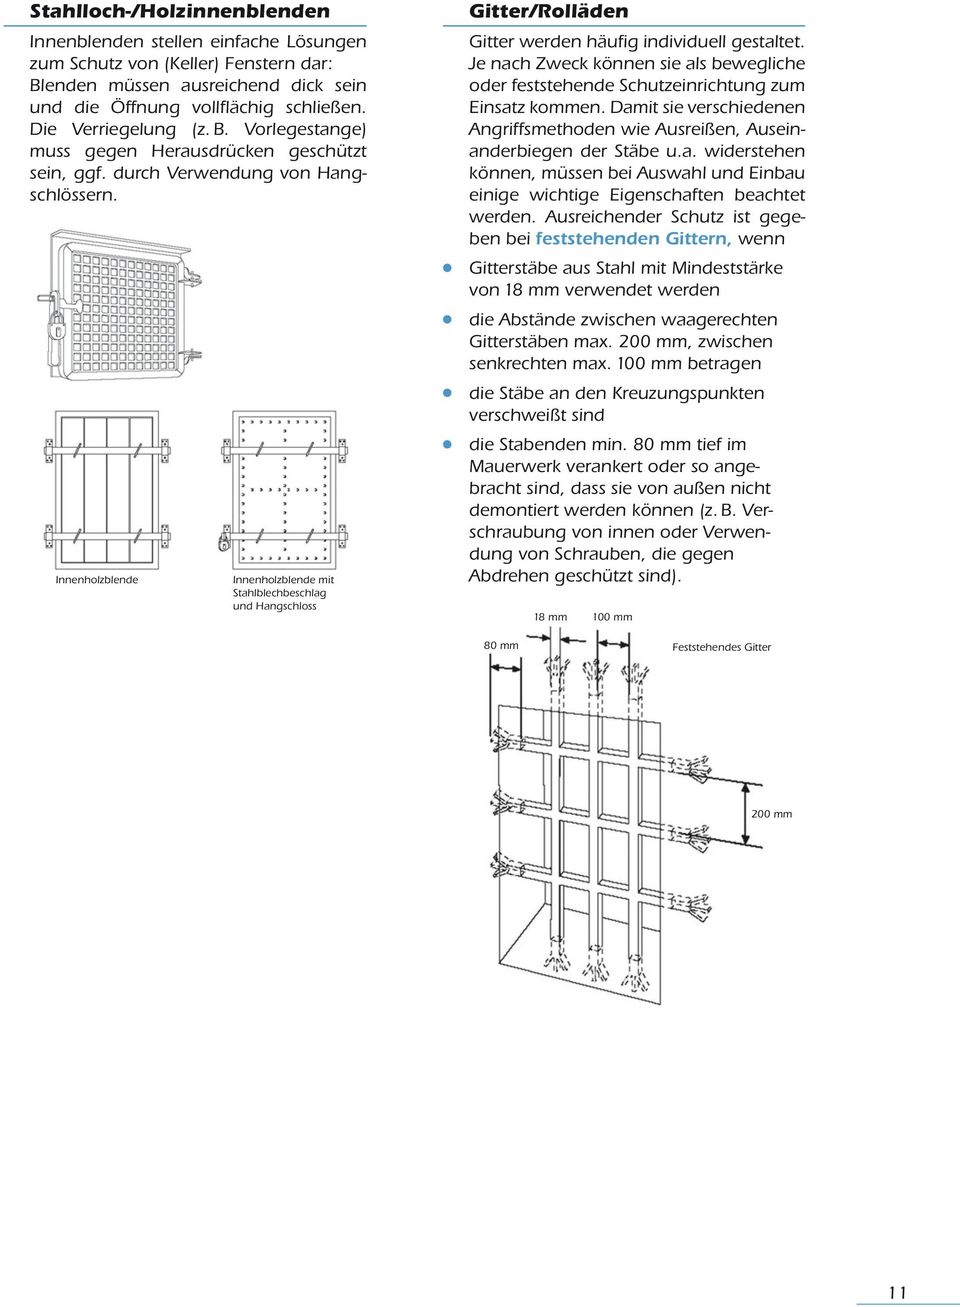 Innenholzblende Innenholzblende mit Stahlblechbeschlag und Hangschloss Gitter/Rolläden Gitter werden häufig individuell gestaltet.